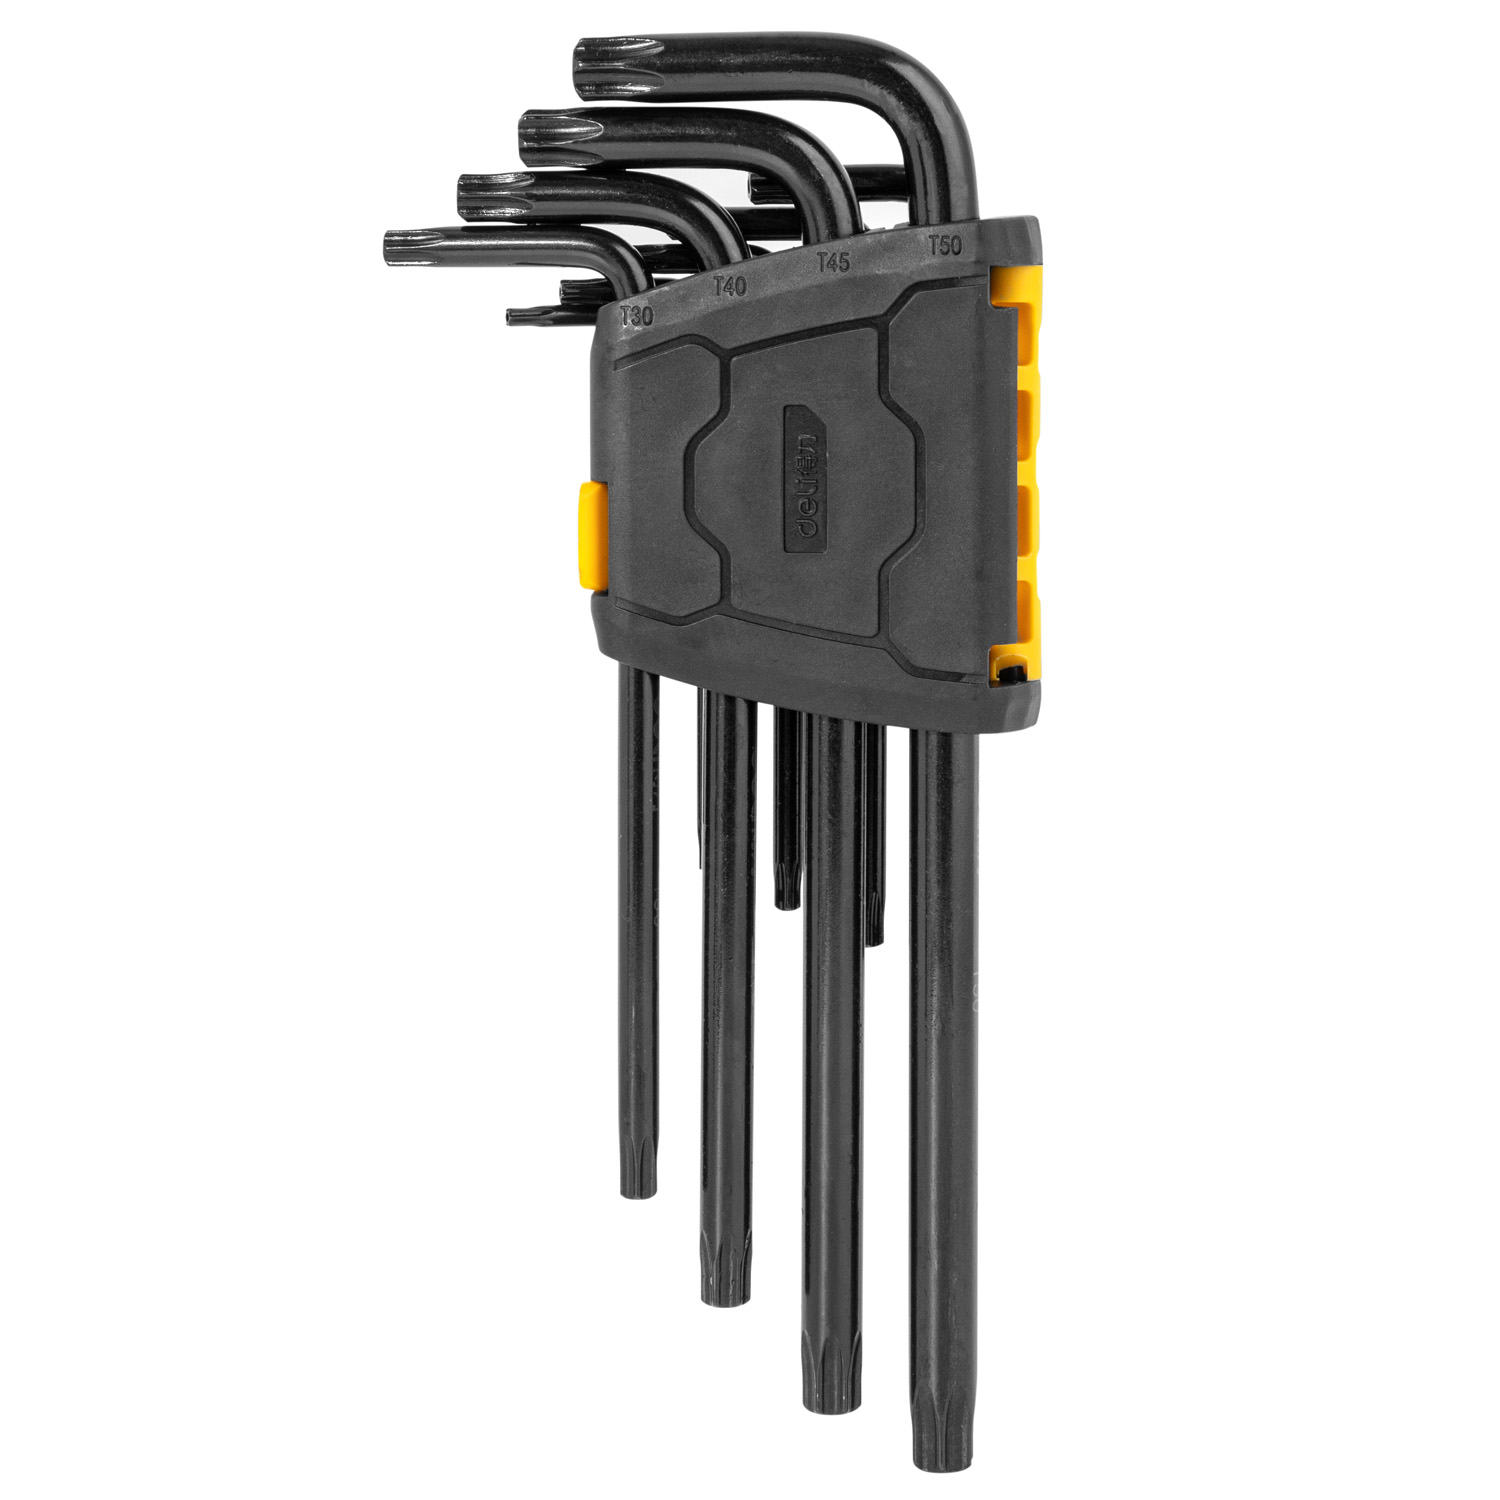 Precision long handle Hex Keys for screwdriver